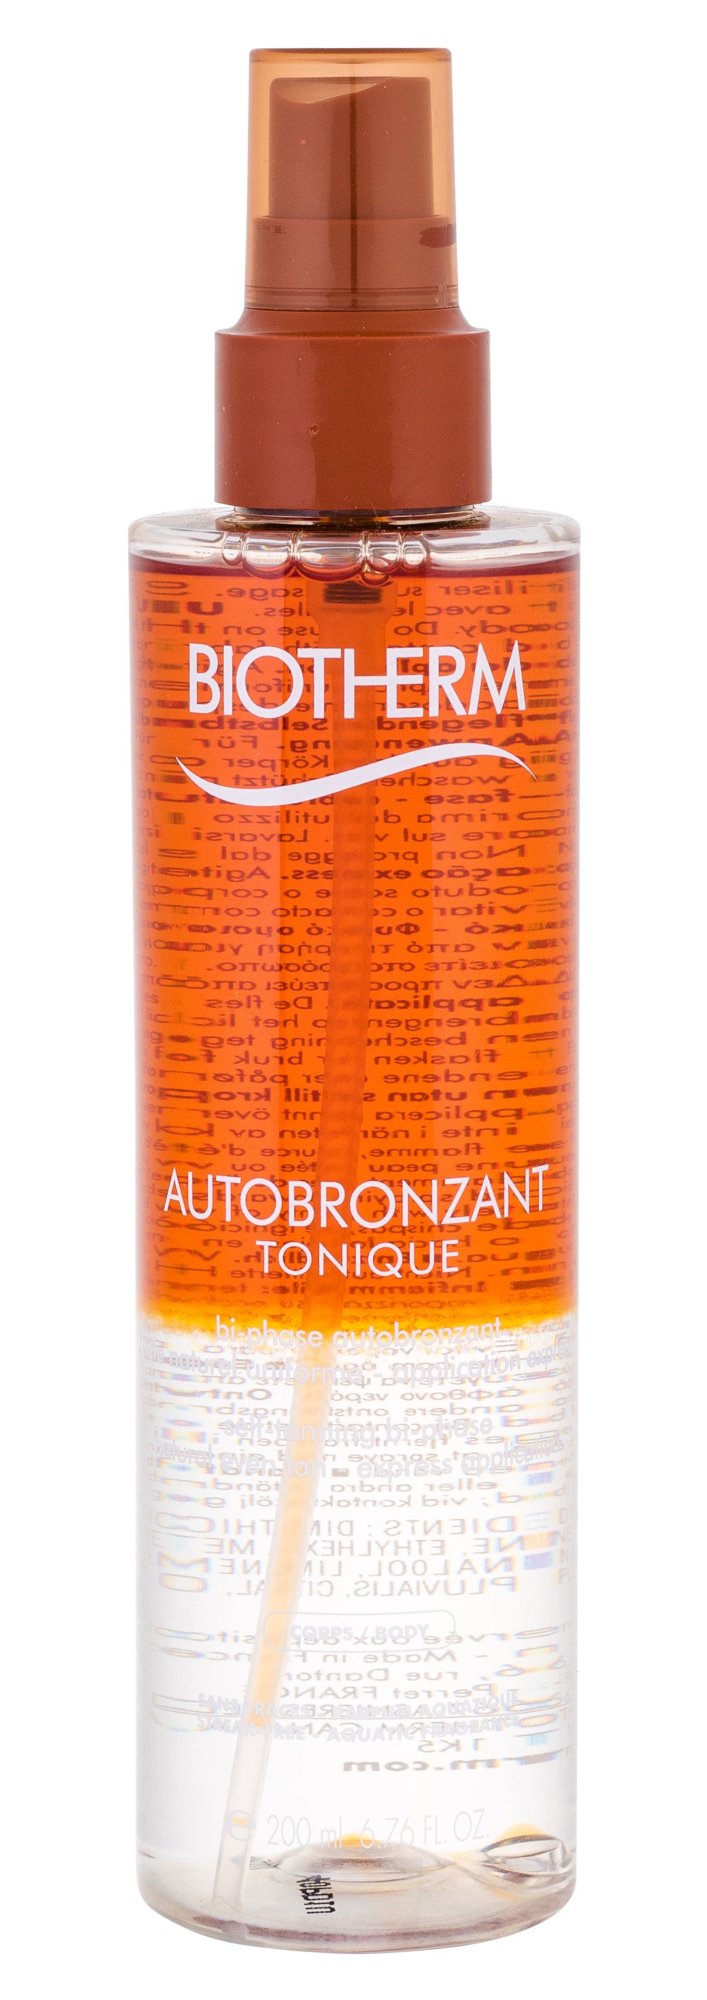 Biotherm Autobronzant Tonique savaiminio įdegio kremas